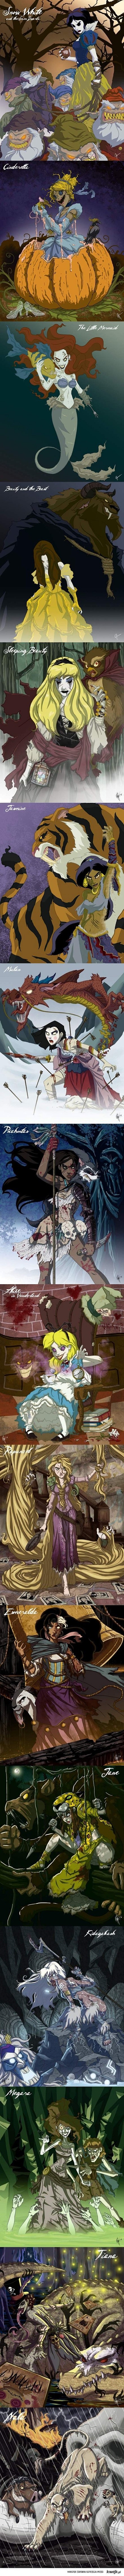 Zombie Disney Prince...